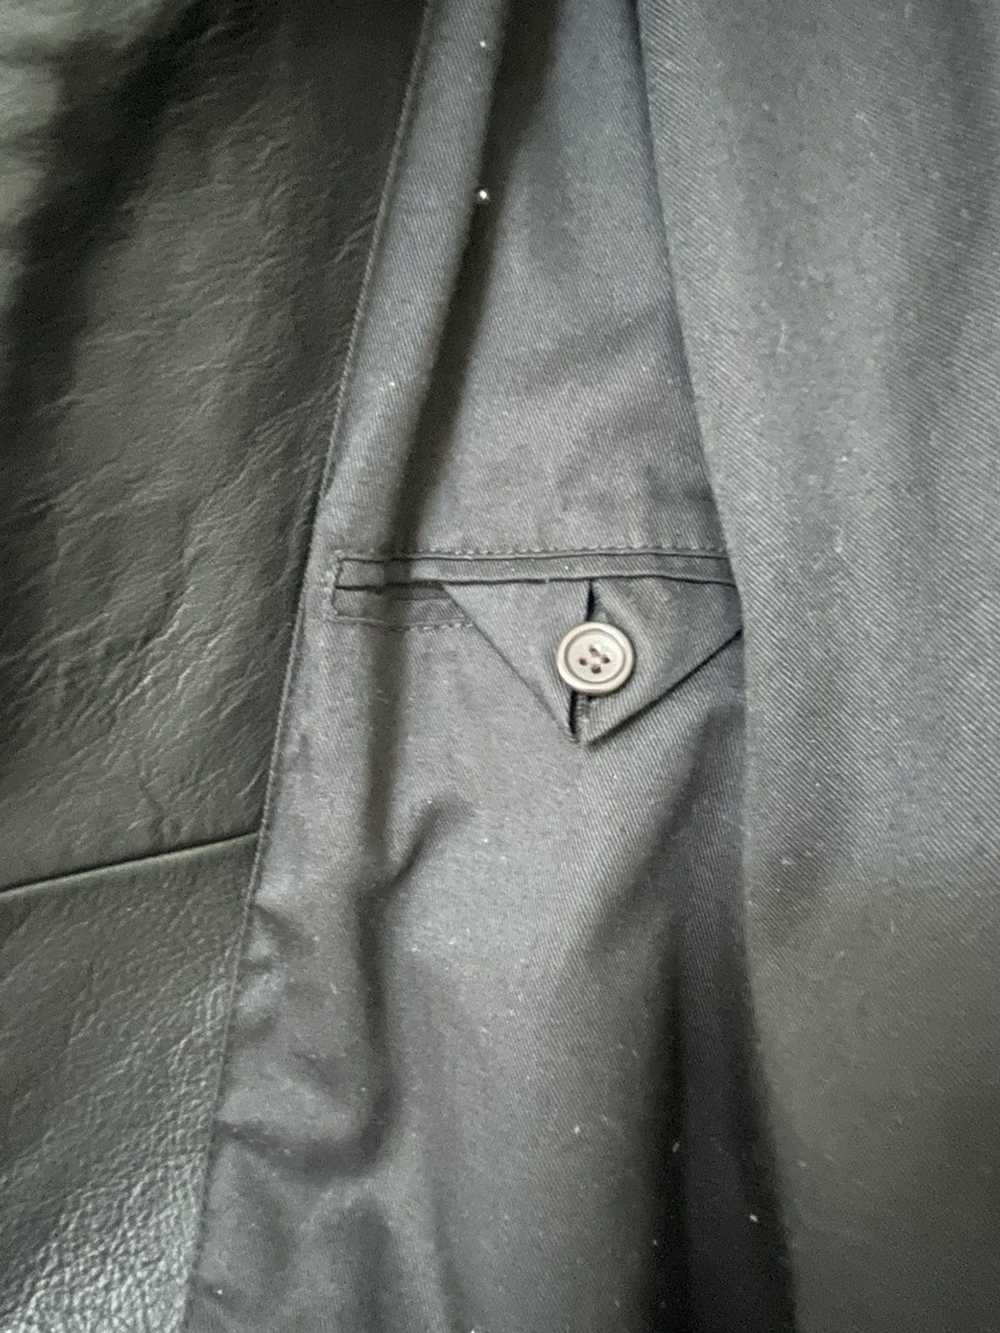 Jack Spade Jack Spade leather jacket near mint - image 6